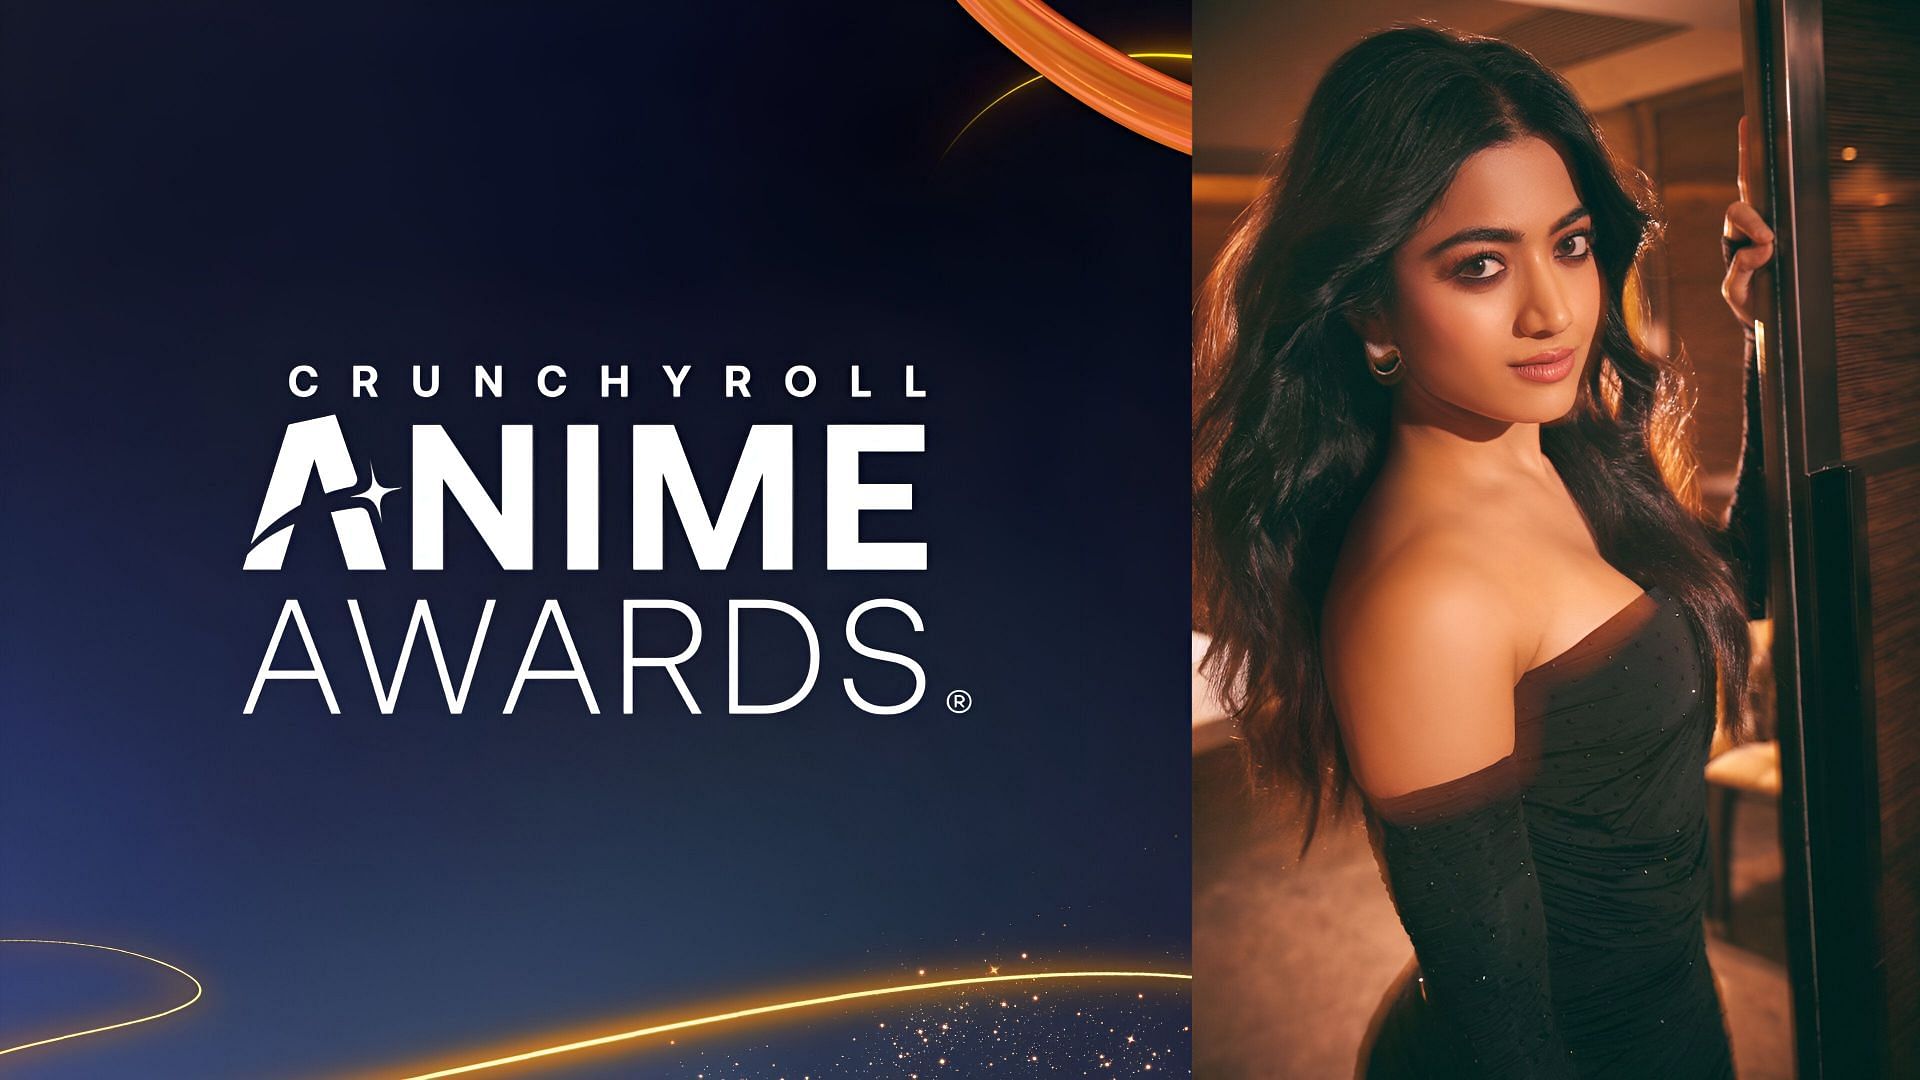 Crunchyroll Anime Awards enlists Rashmika Mandanna and others as presenters